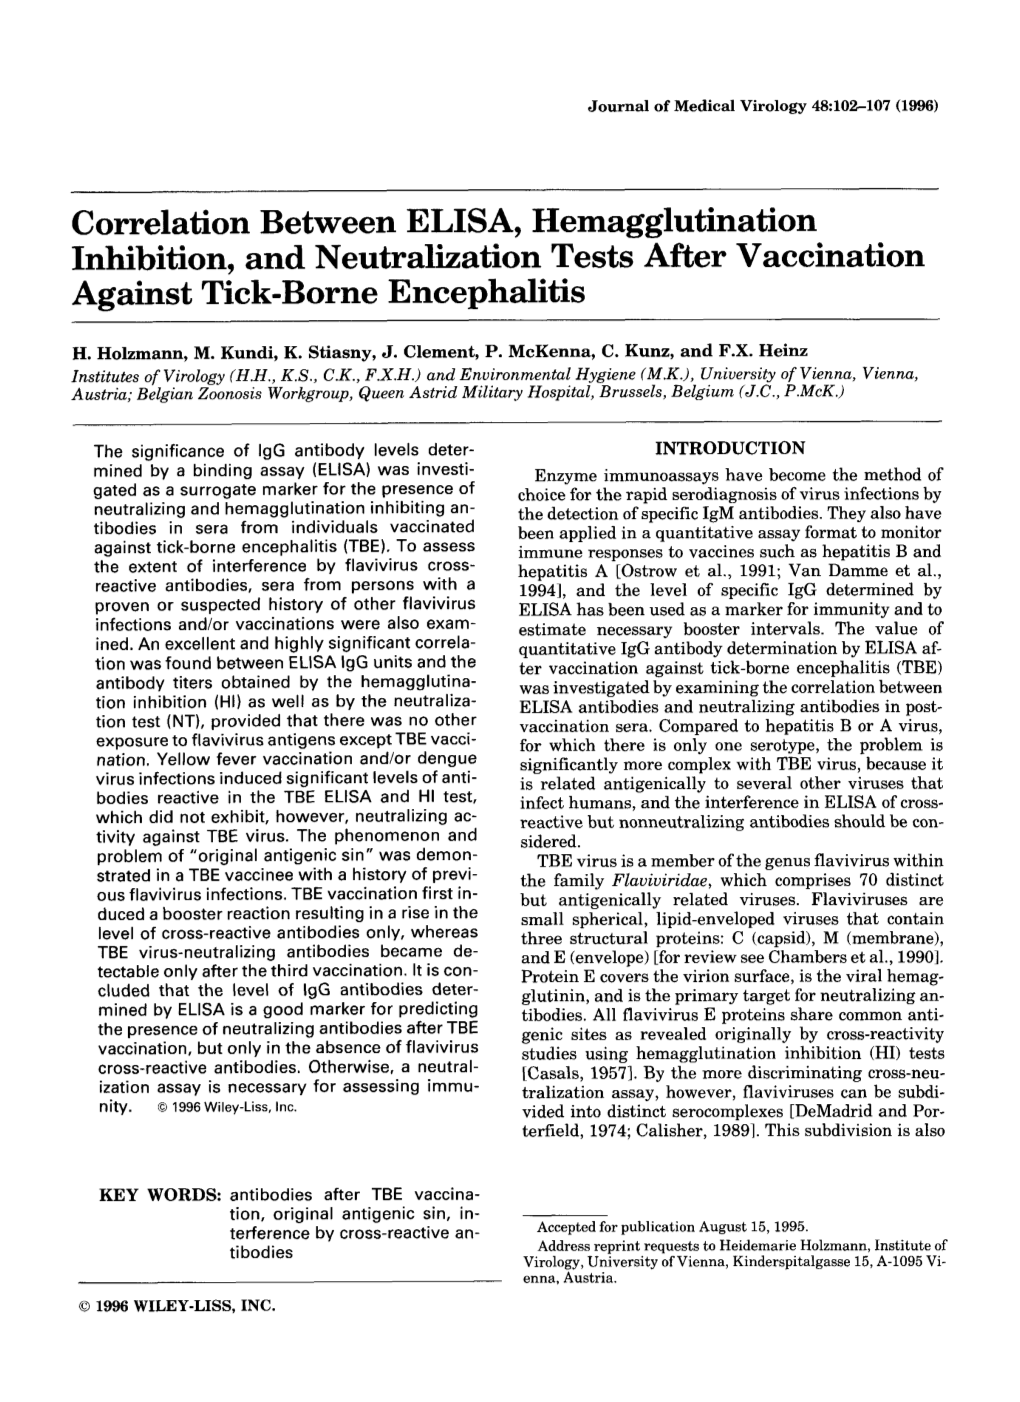 Correlation Between ELISA, Hemagglutination Inhibition, and Neutralization Tests After Vaccination Against Tick-Borne Encephalitis